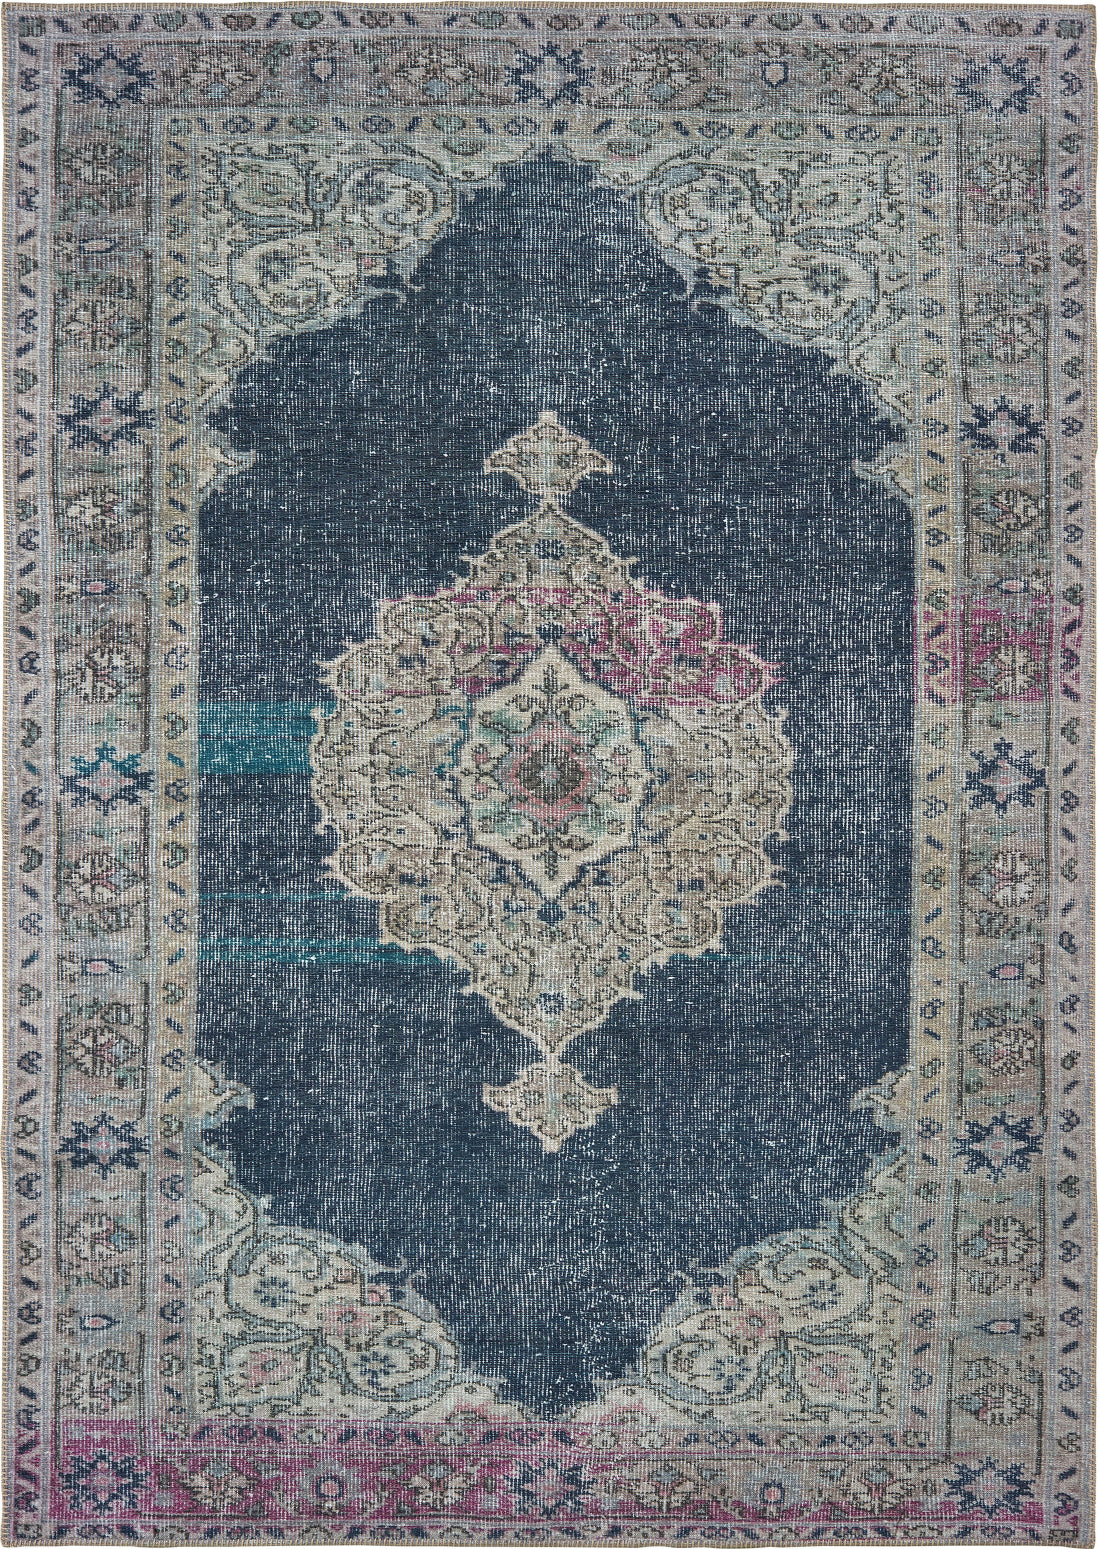 Oriental Weavers Sofia 85817 Blue Grey Area Rug main image featured